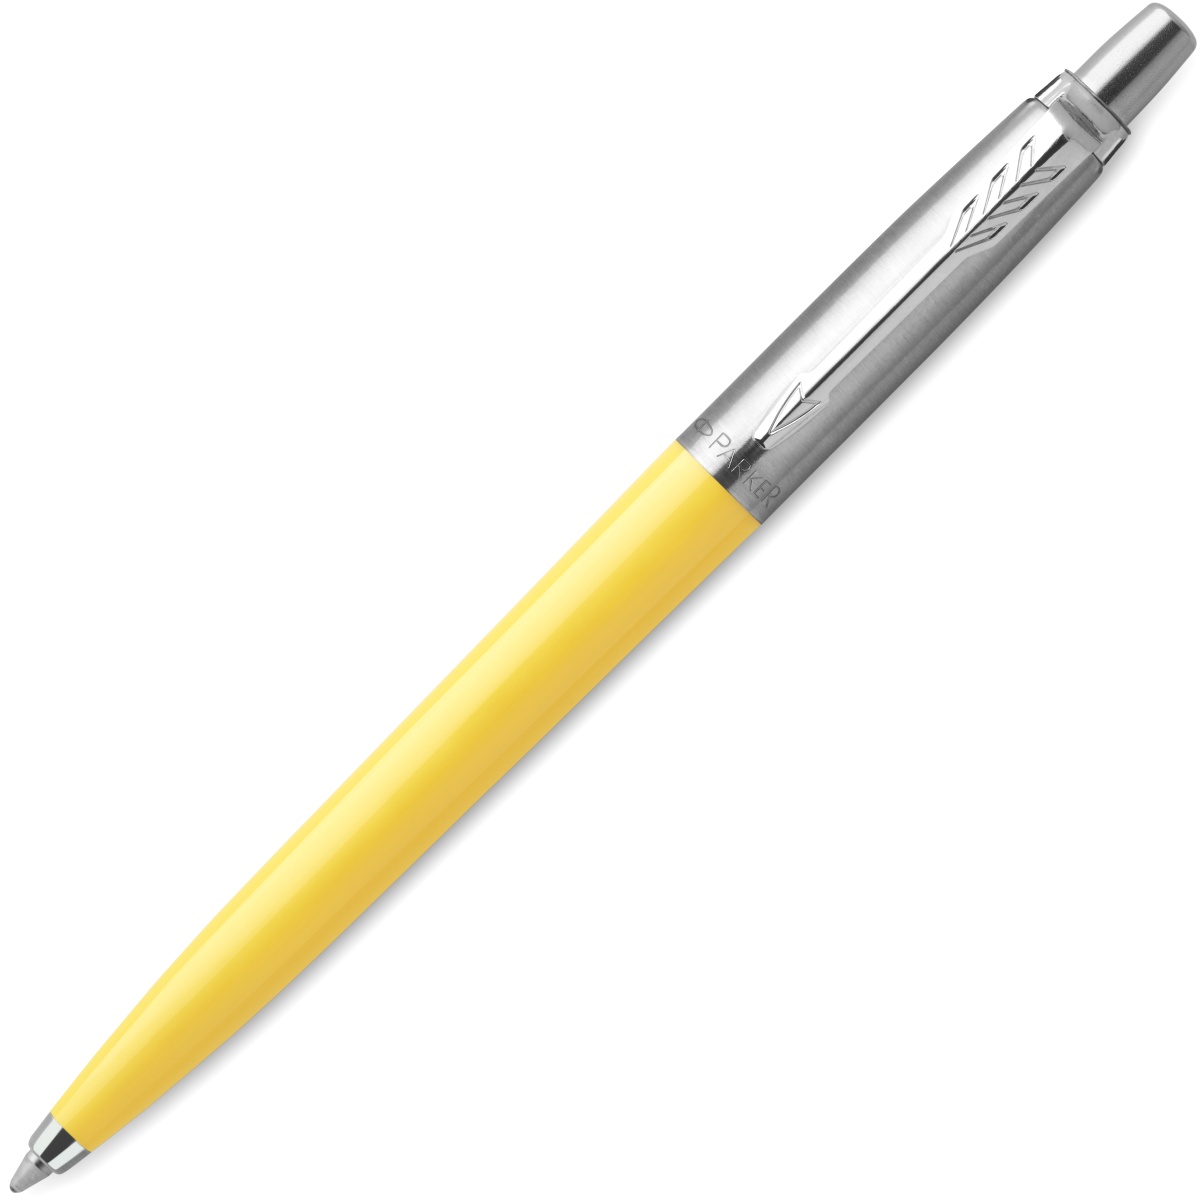  Шариковая ручка Parker Jotter K60 Originals Color Plastic 2019, Yellow СT, фото 2